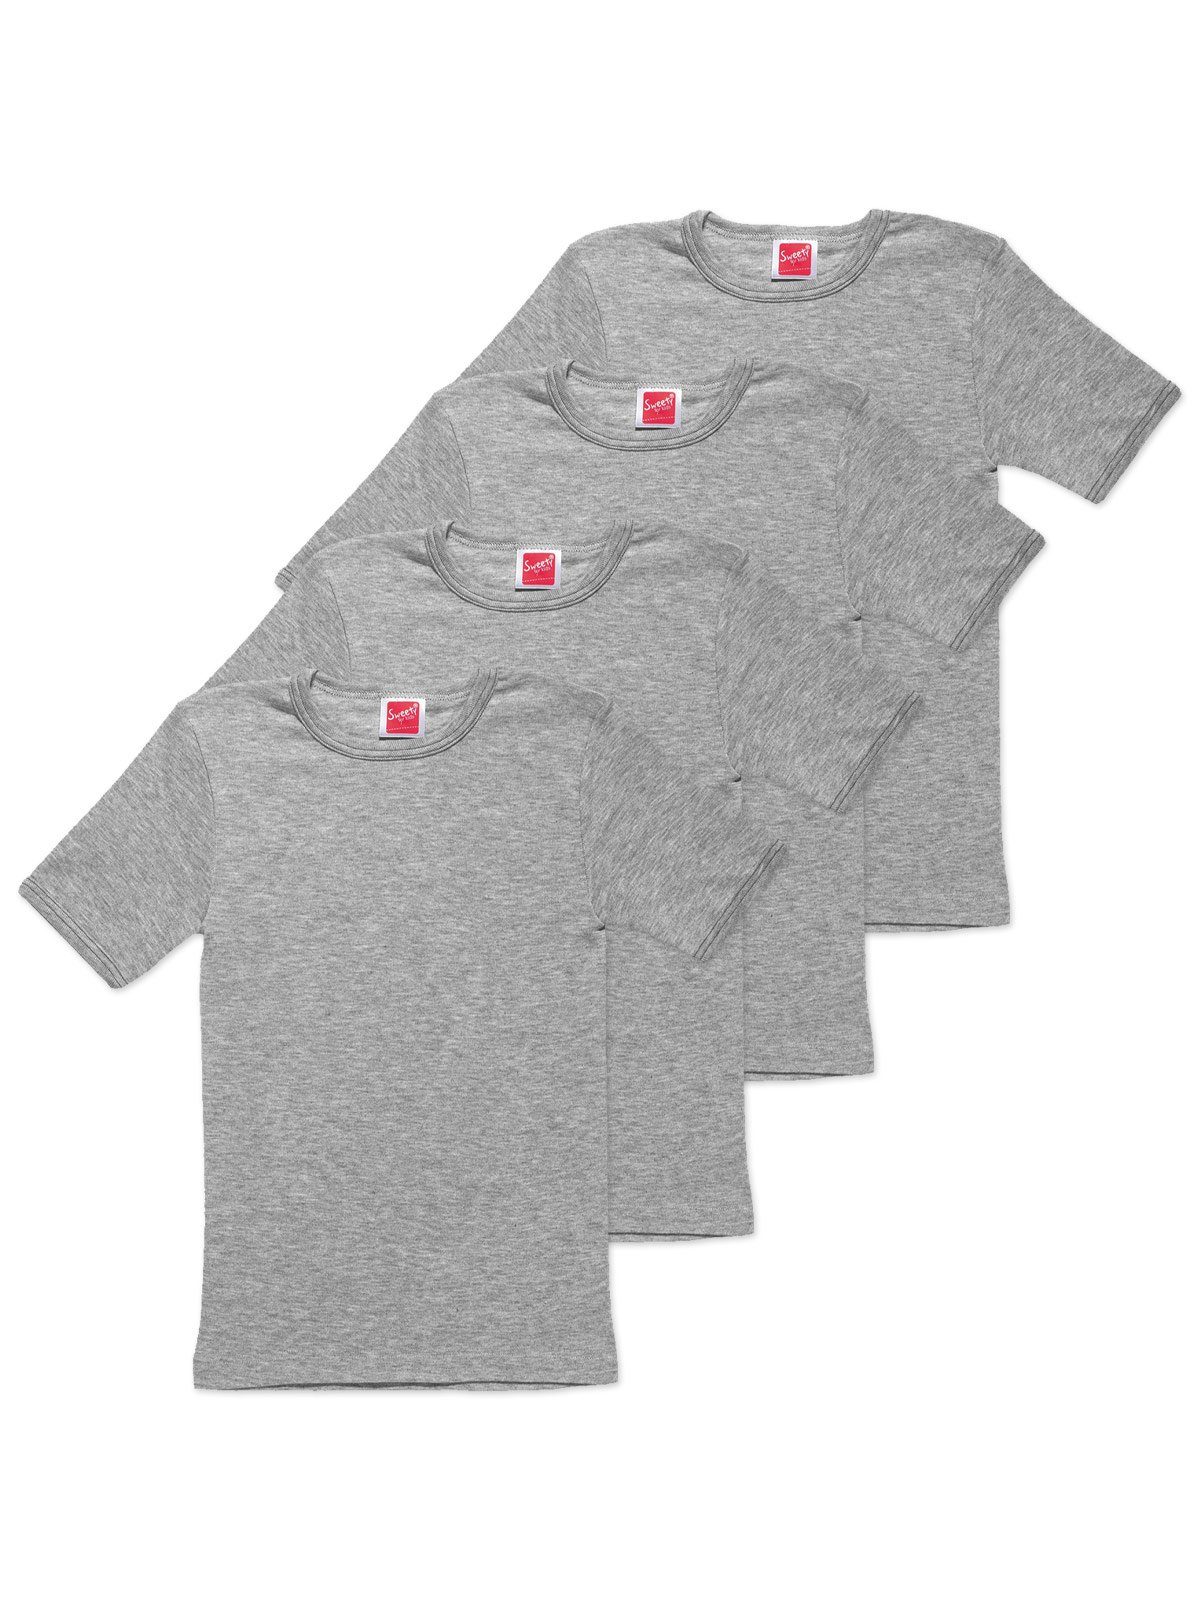 Sweety for Kids Achselhemd 4er Sparpack Kinder Shirt Funktionswäsche (Spar-Set, 4-St) hohe Markenqualität